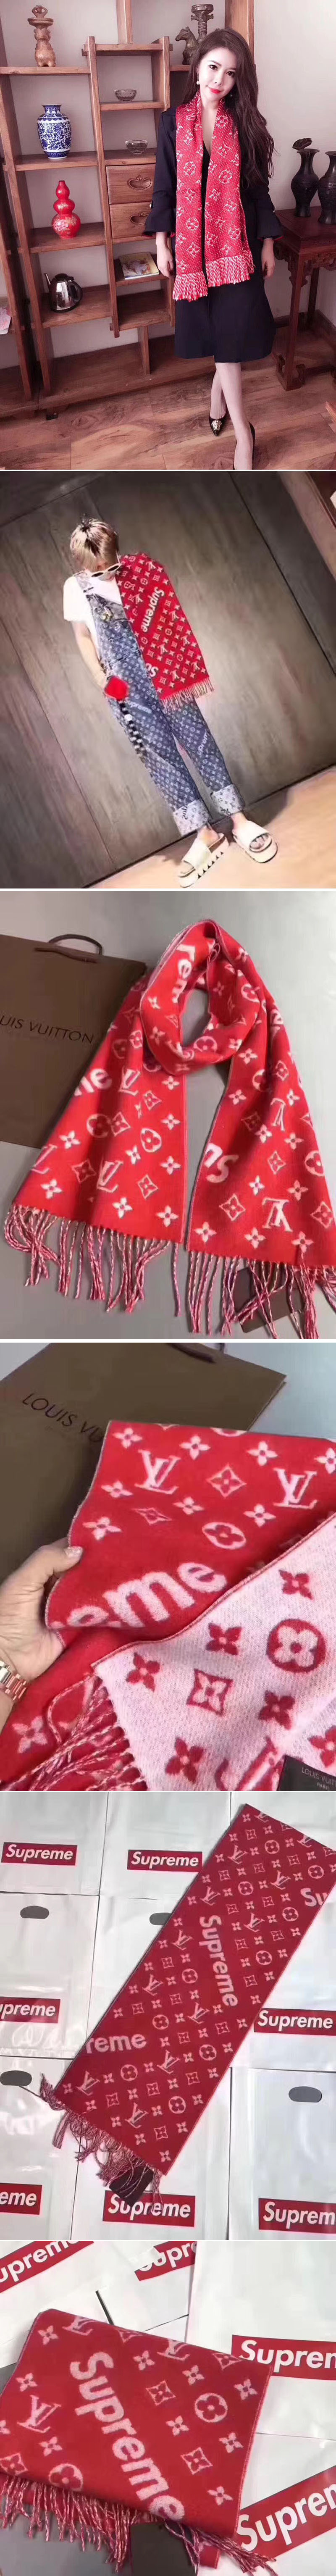 Replica Louis Vuitton x supreme Monogram Scarf And Shawl Red